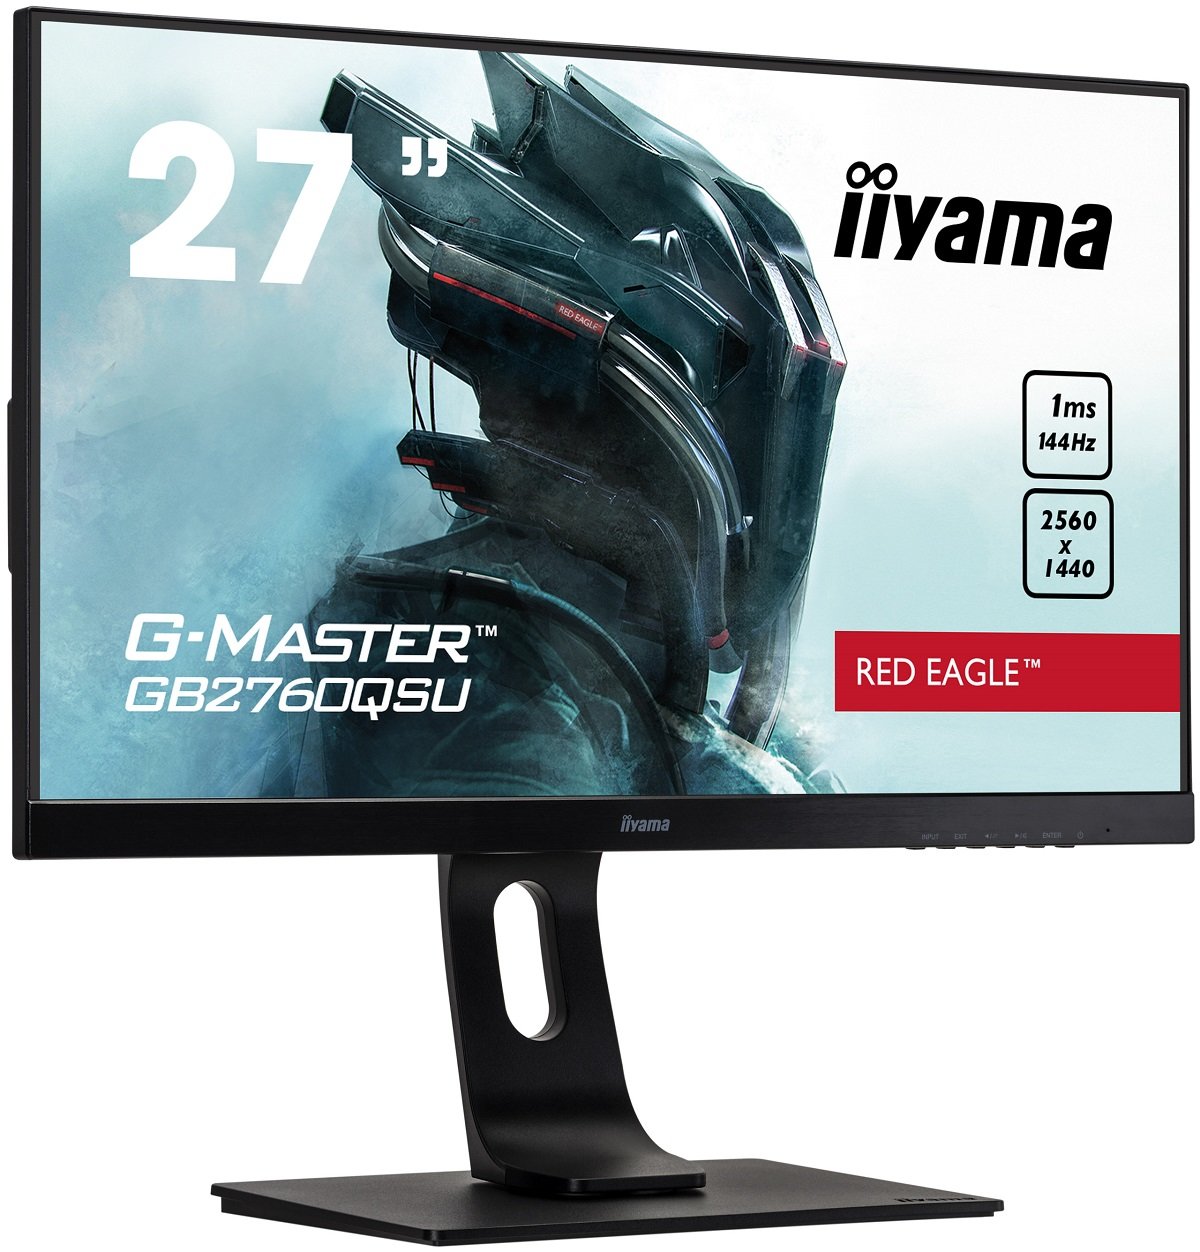 Monitor Iiyama G-Master GB2760QSU-B1 Red Eagle widok na ekran od przodu pod skosem z lewej strony